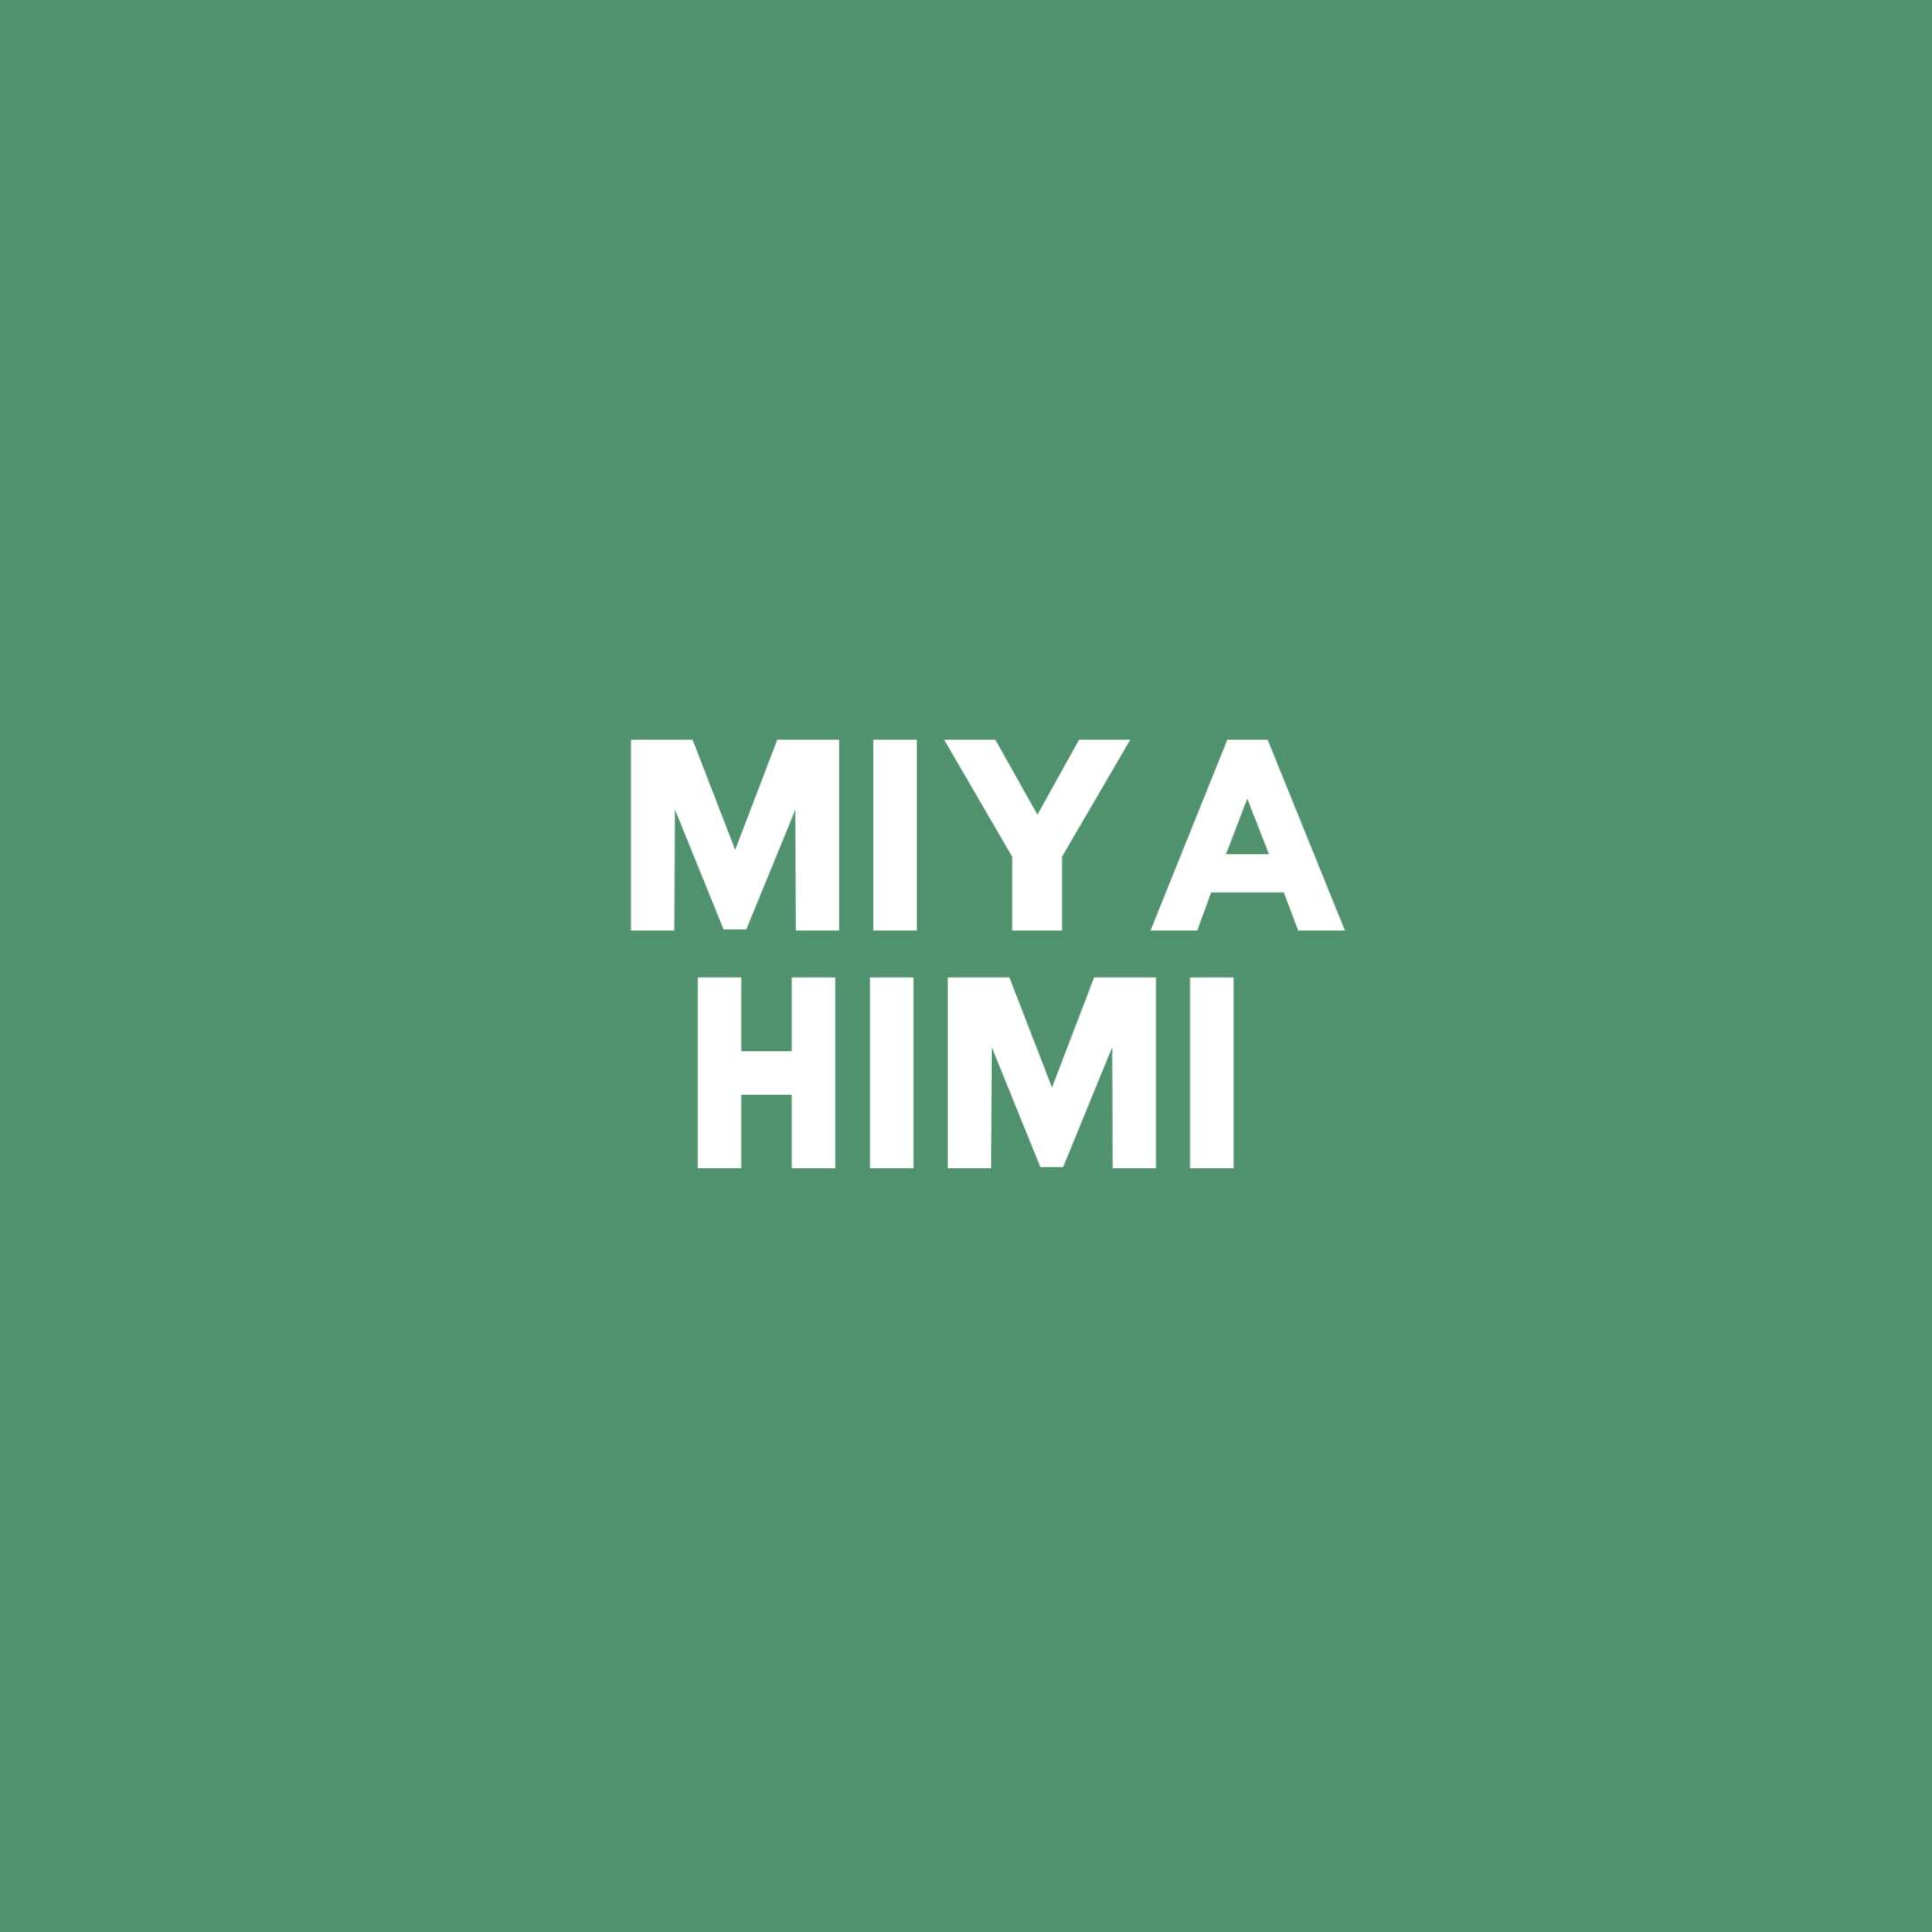 MIYA HIMI – The Craft Central